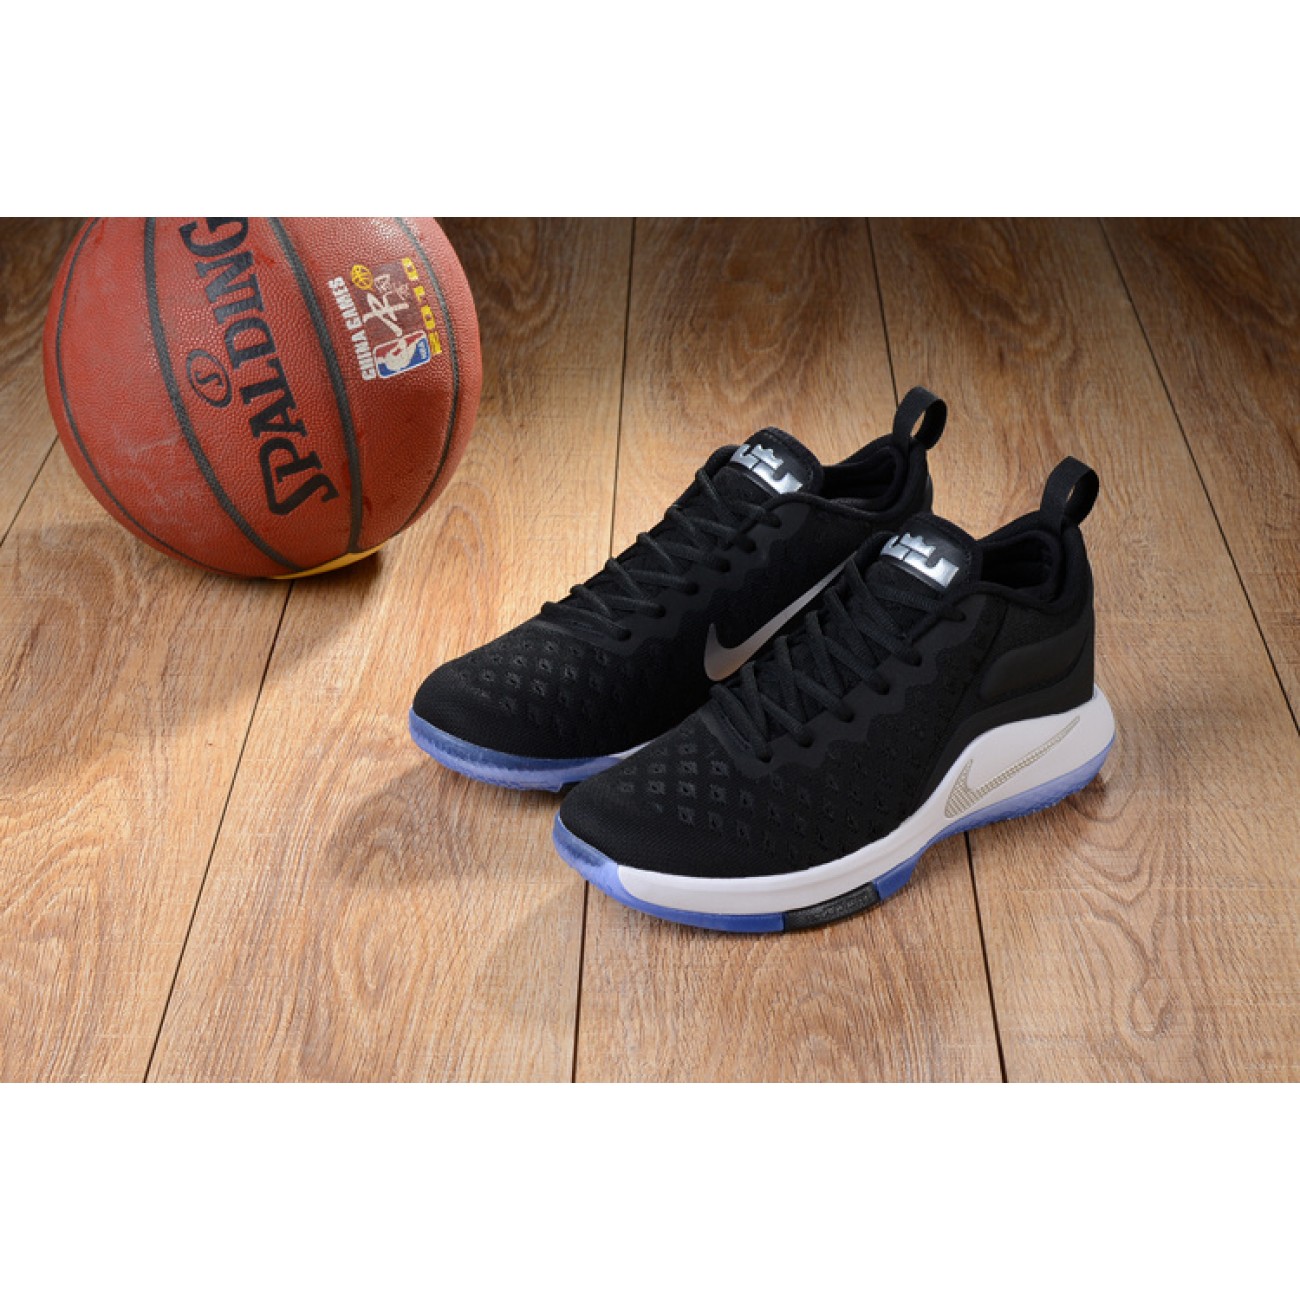 Lebron Witness 2 Flyknit Basketball Shoes Black/White/Silver